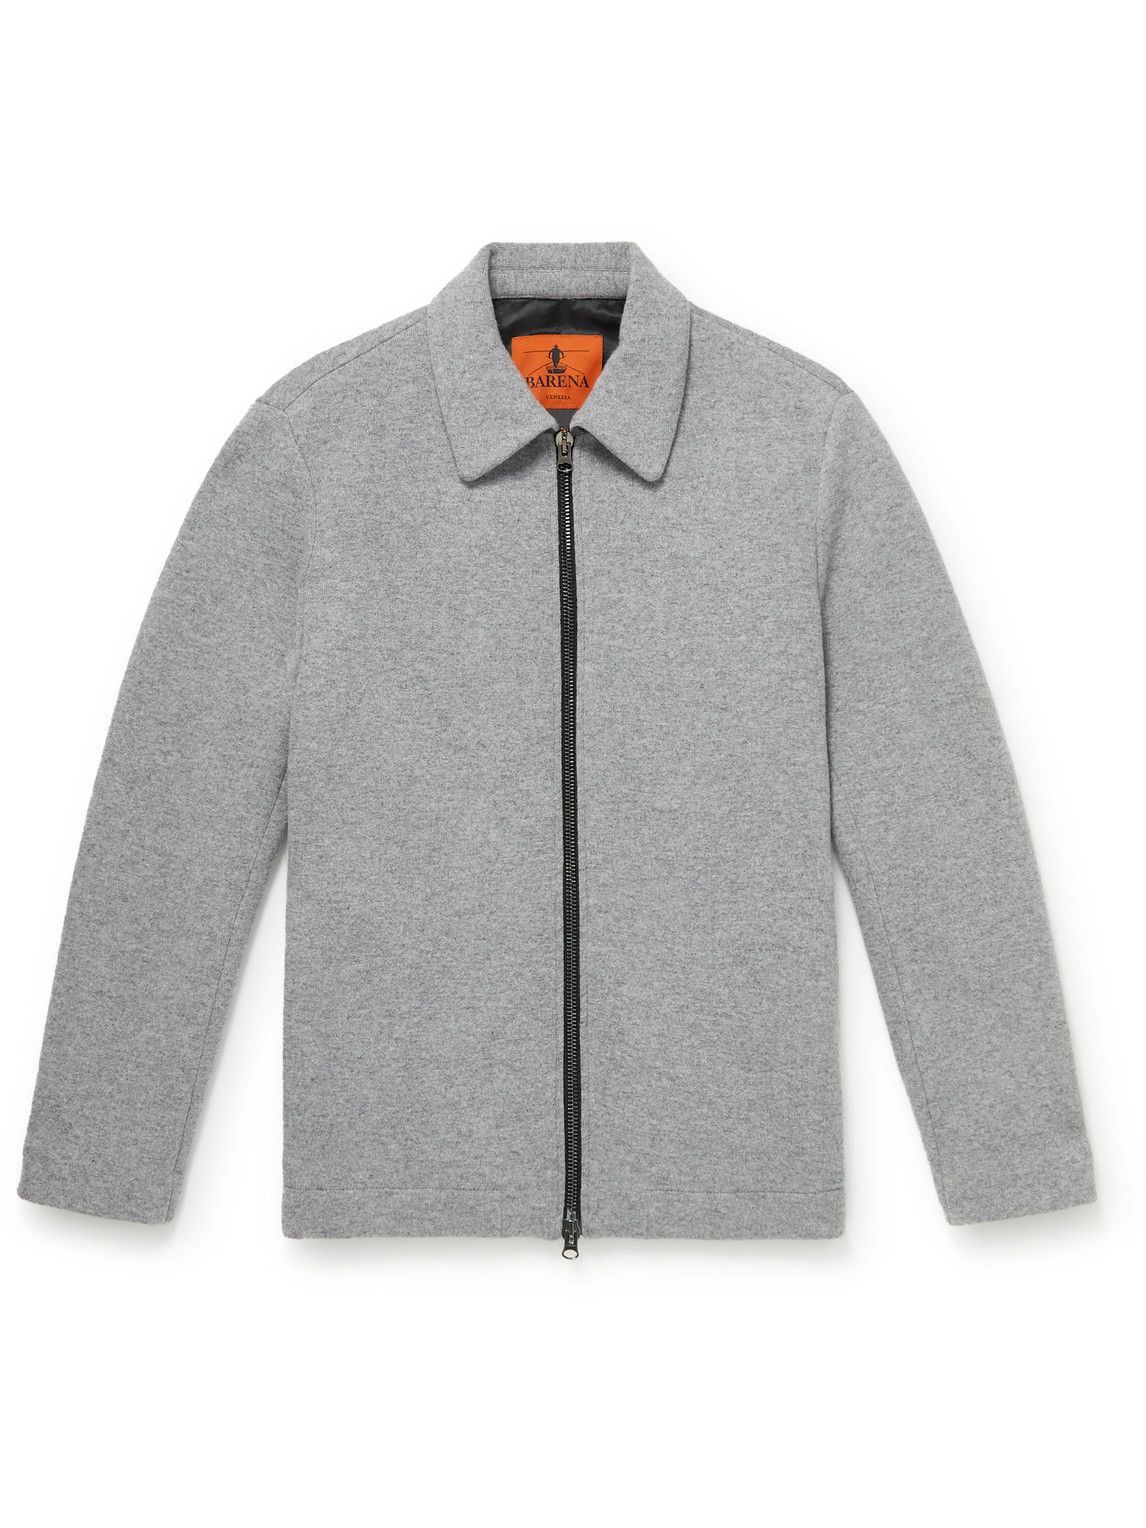 Barena - Wool-Blend Jacket - Gray Barena